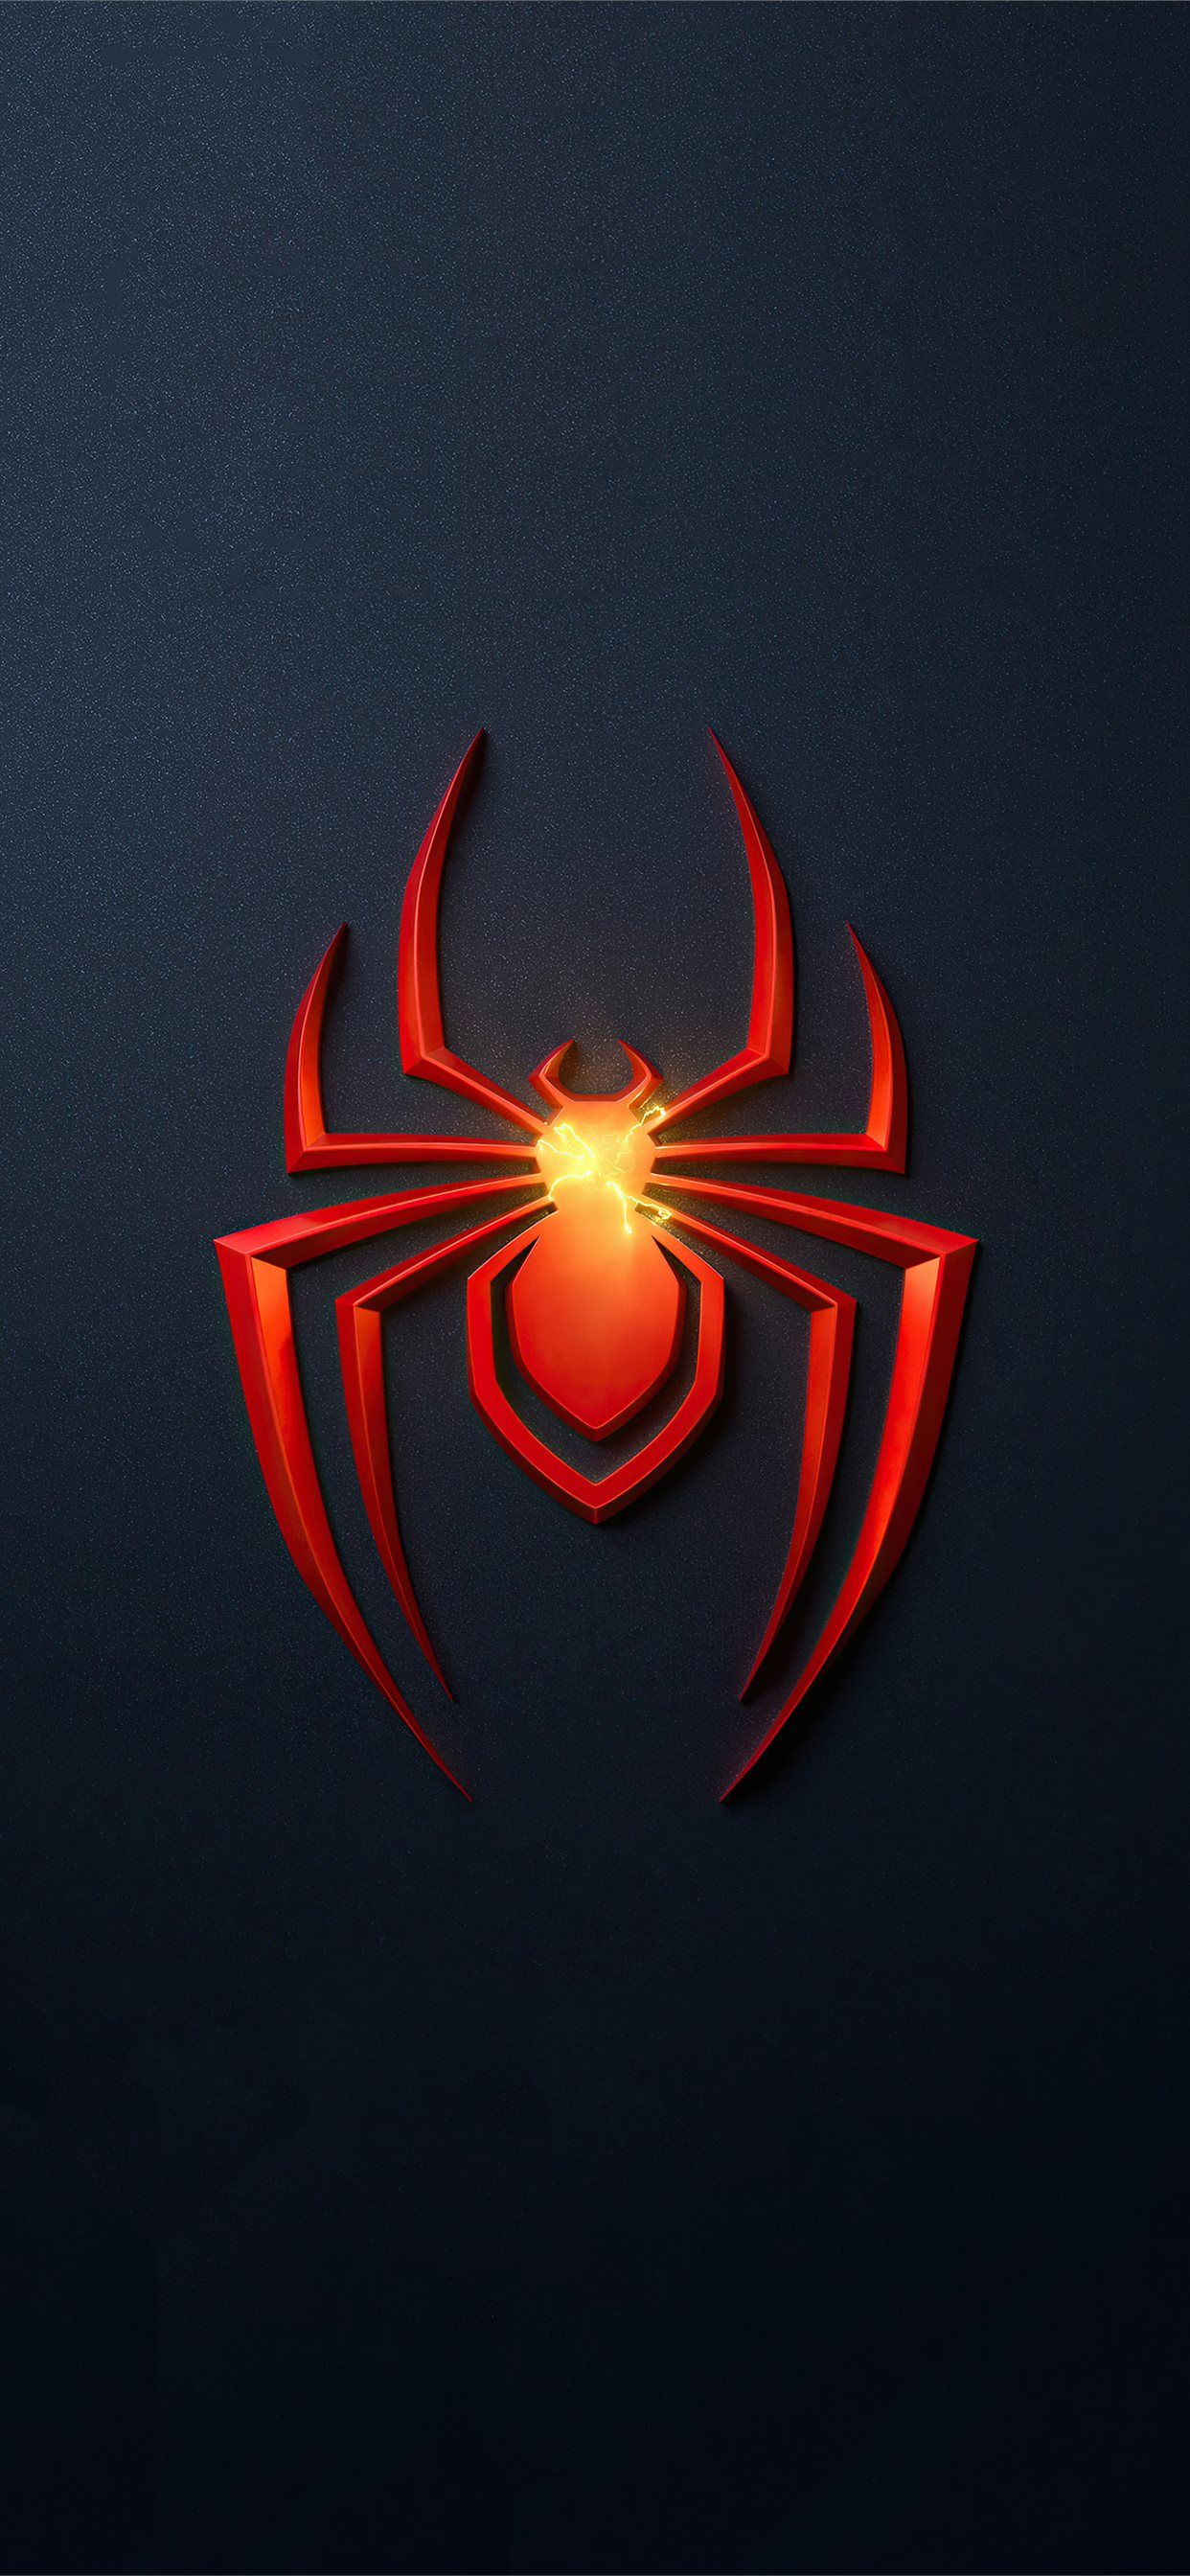 spider man miles morales ps5 game logo 4k iPhone X Wallpaper Free